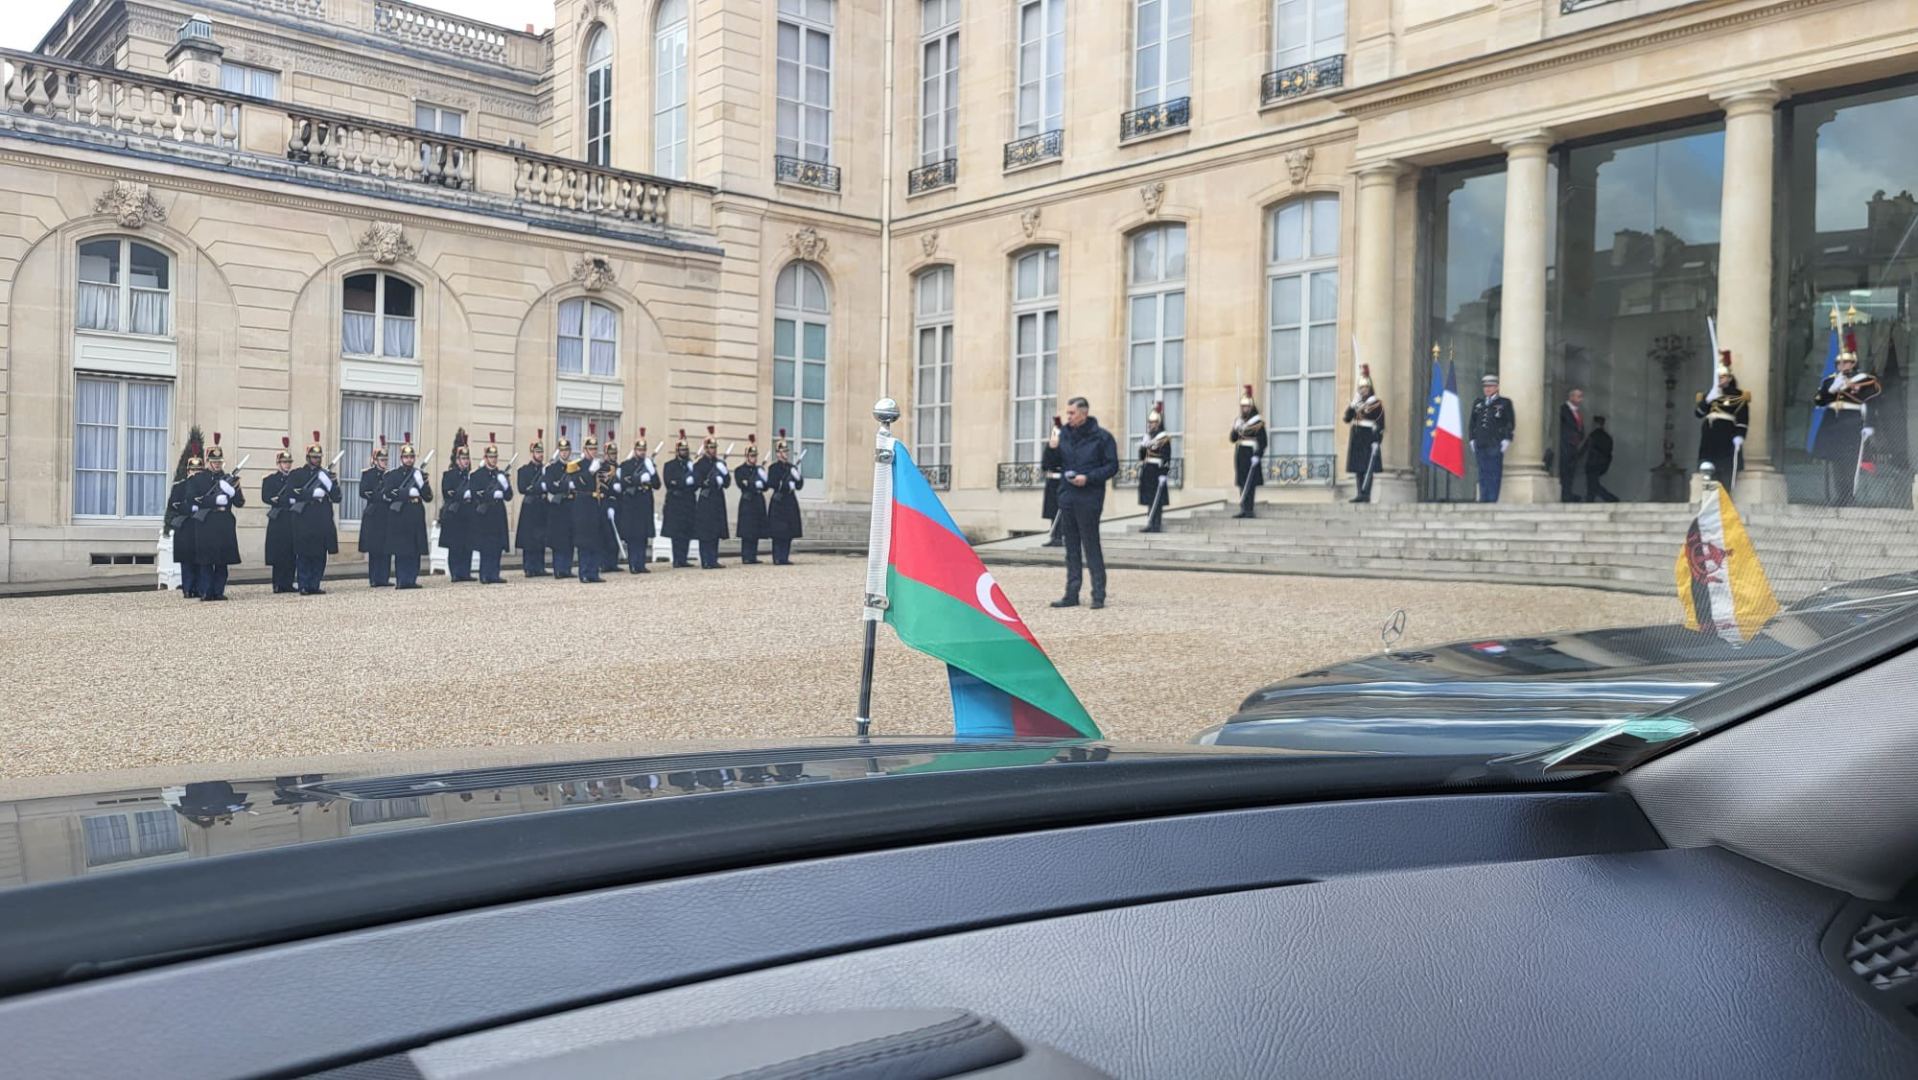 Azerbaijani ambassador presents credentials to French president (PHOTO/VIDEO)